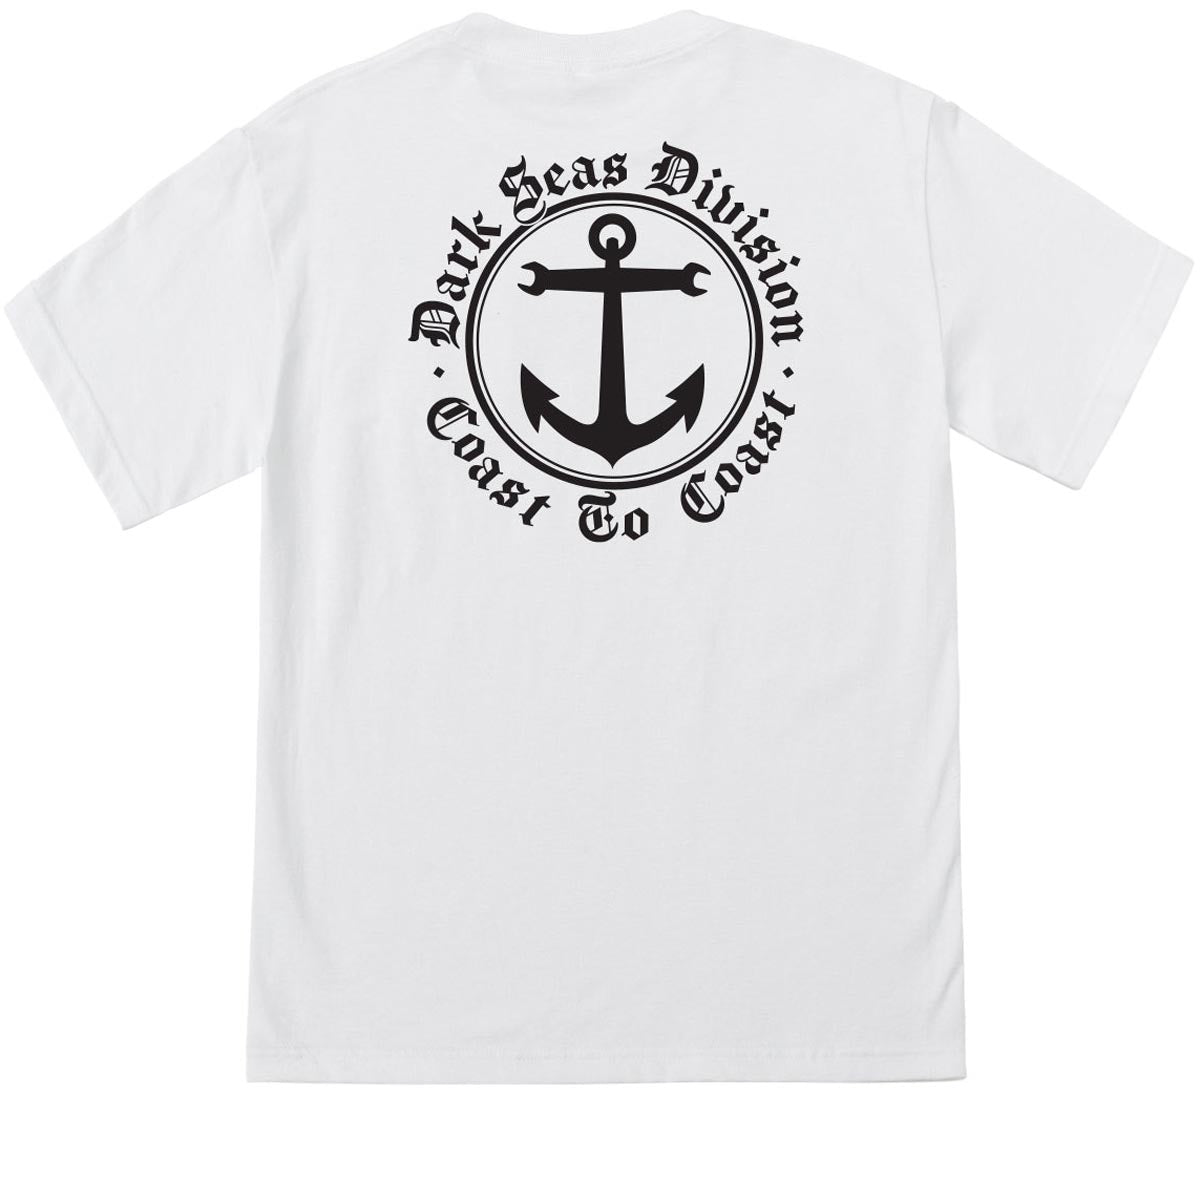 Dark Seas Traditional Pocket T-Shirt - White image 2